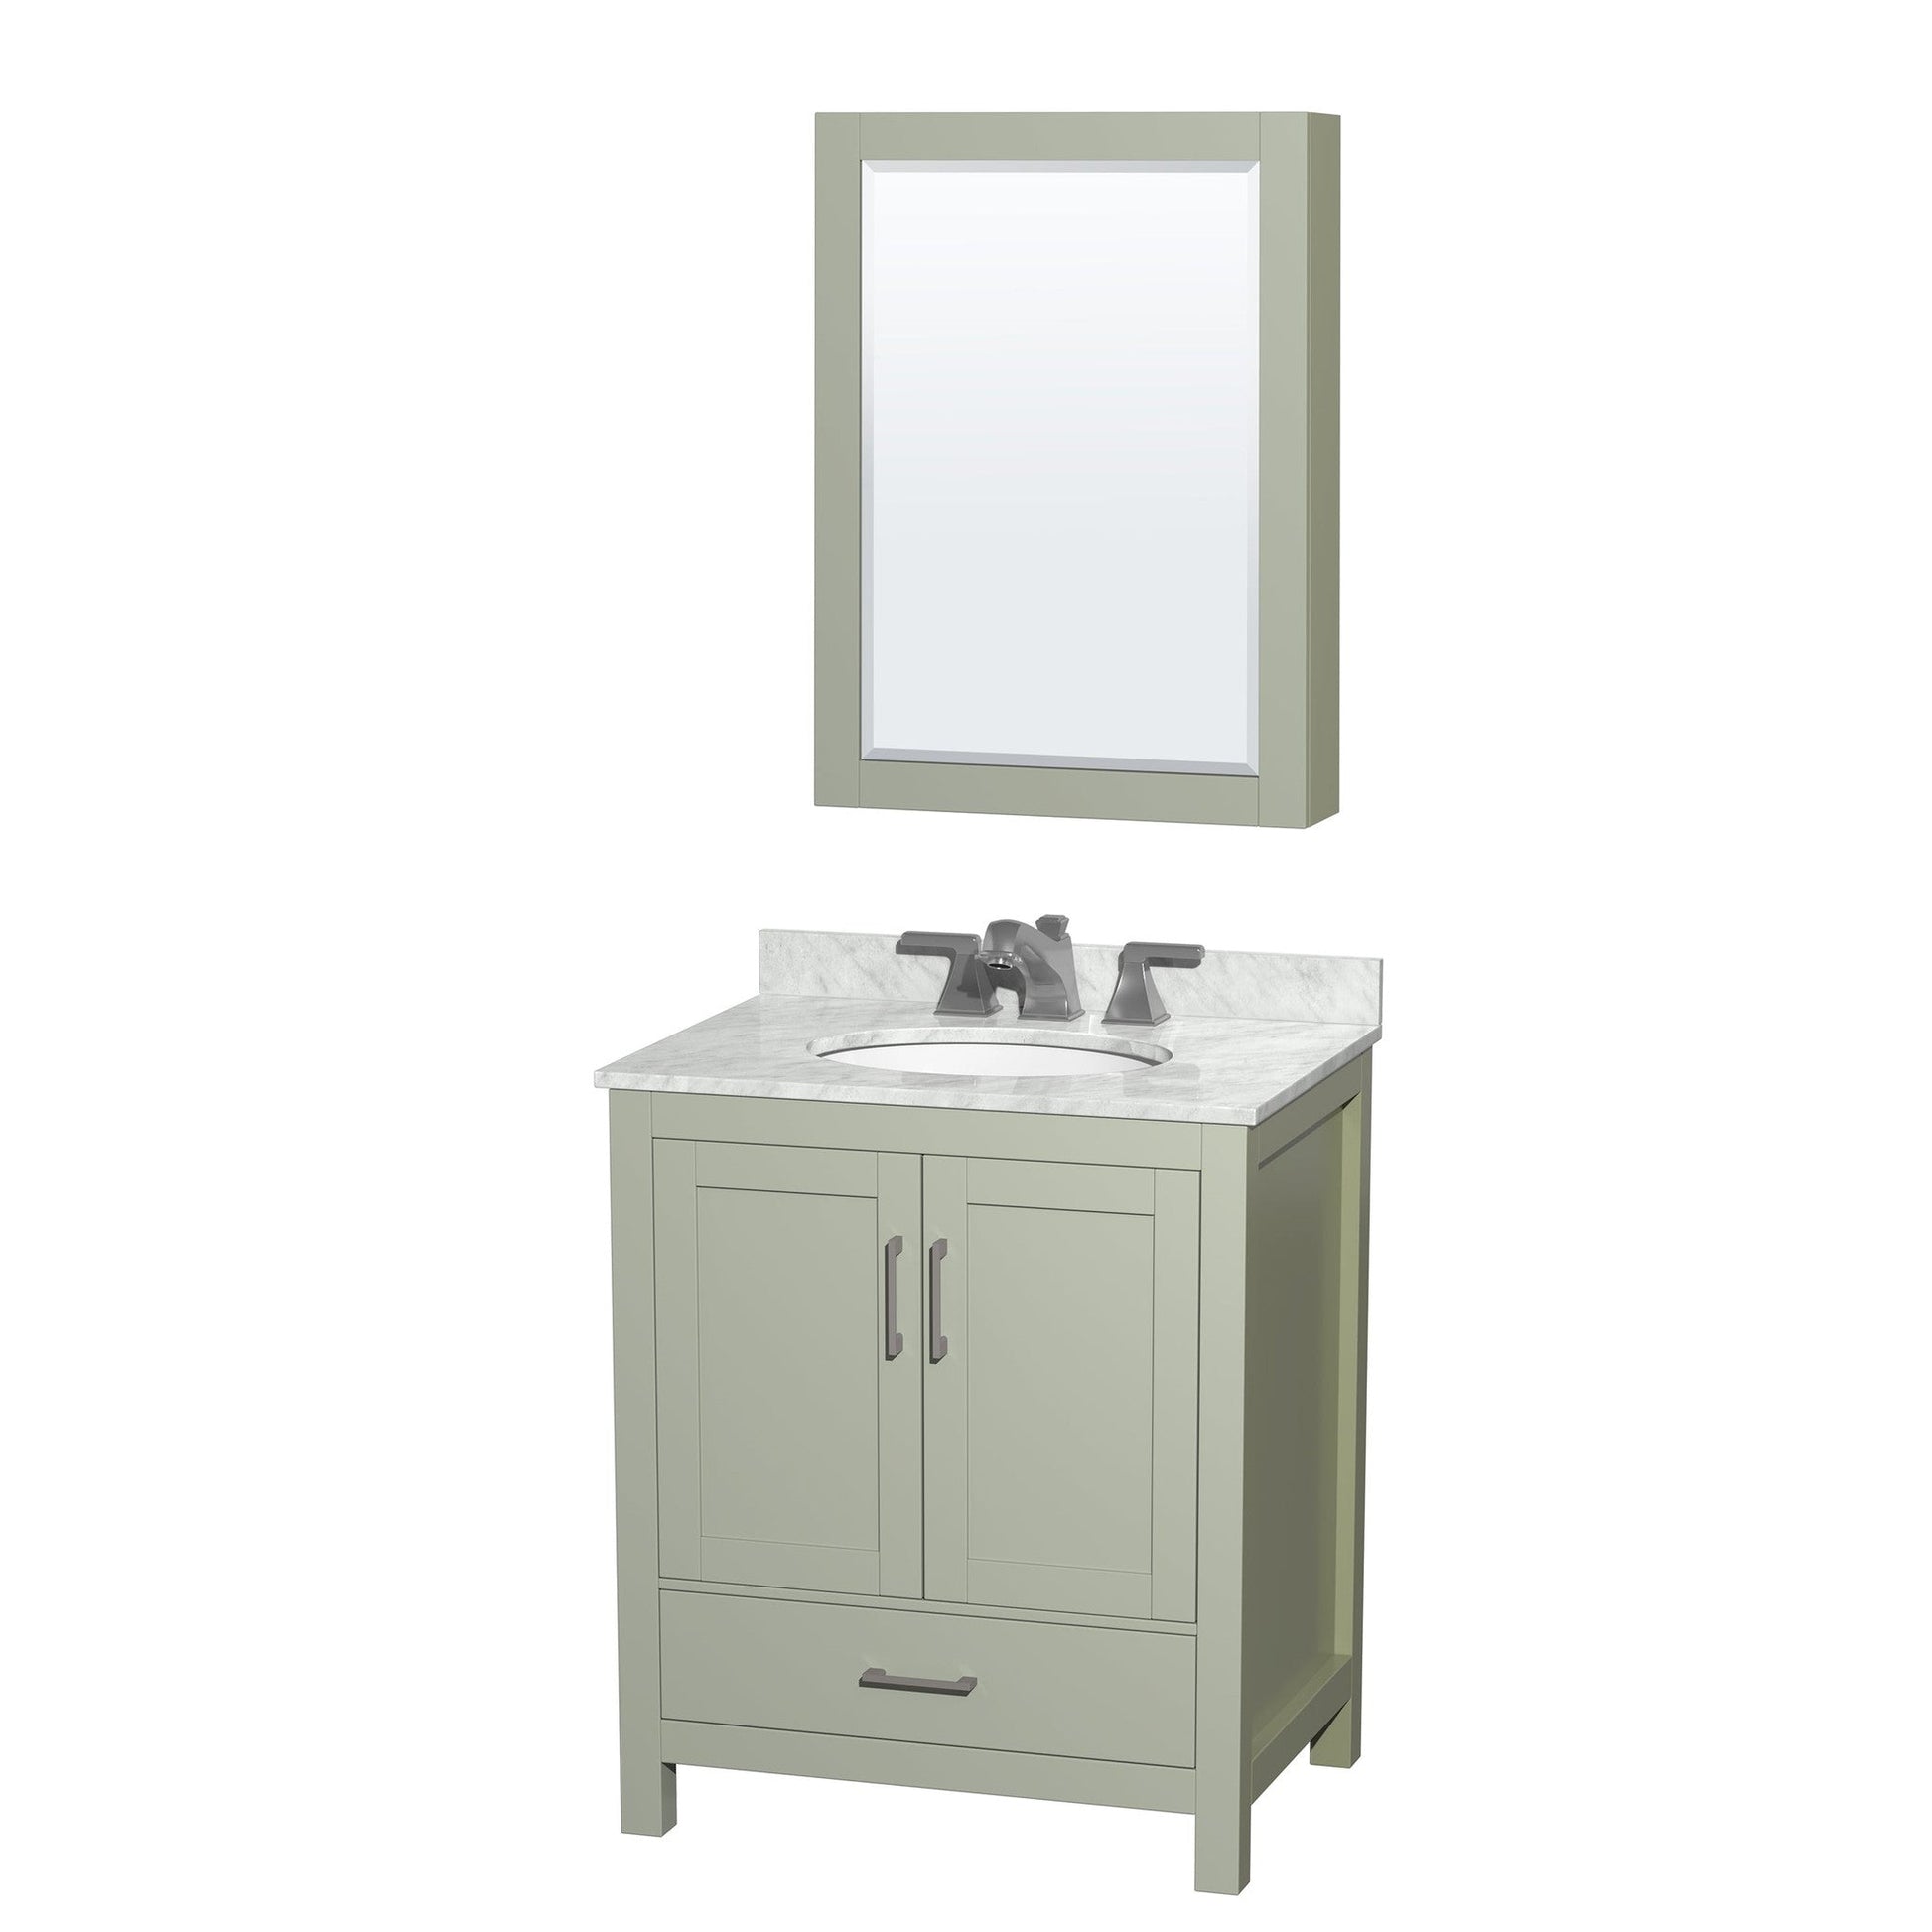 Sheffield 30" Single Bathroom Vanity in Light Green, White Carrara Marble Countertop, Undermount Oval Sink, Brushed Nickel Trim, Medicine Cabinet